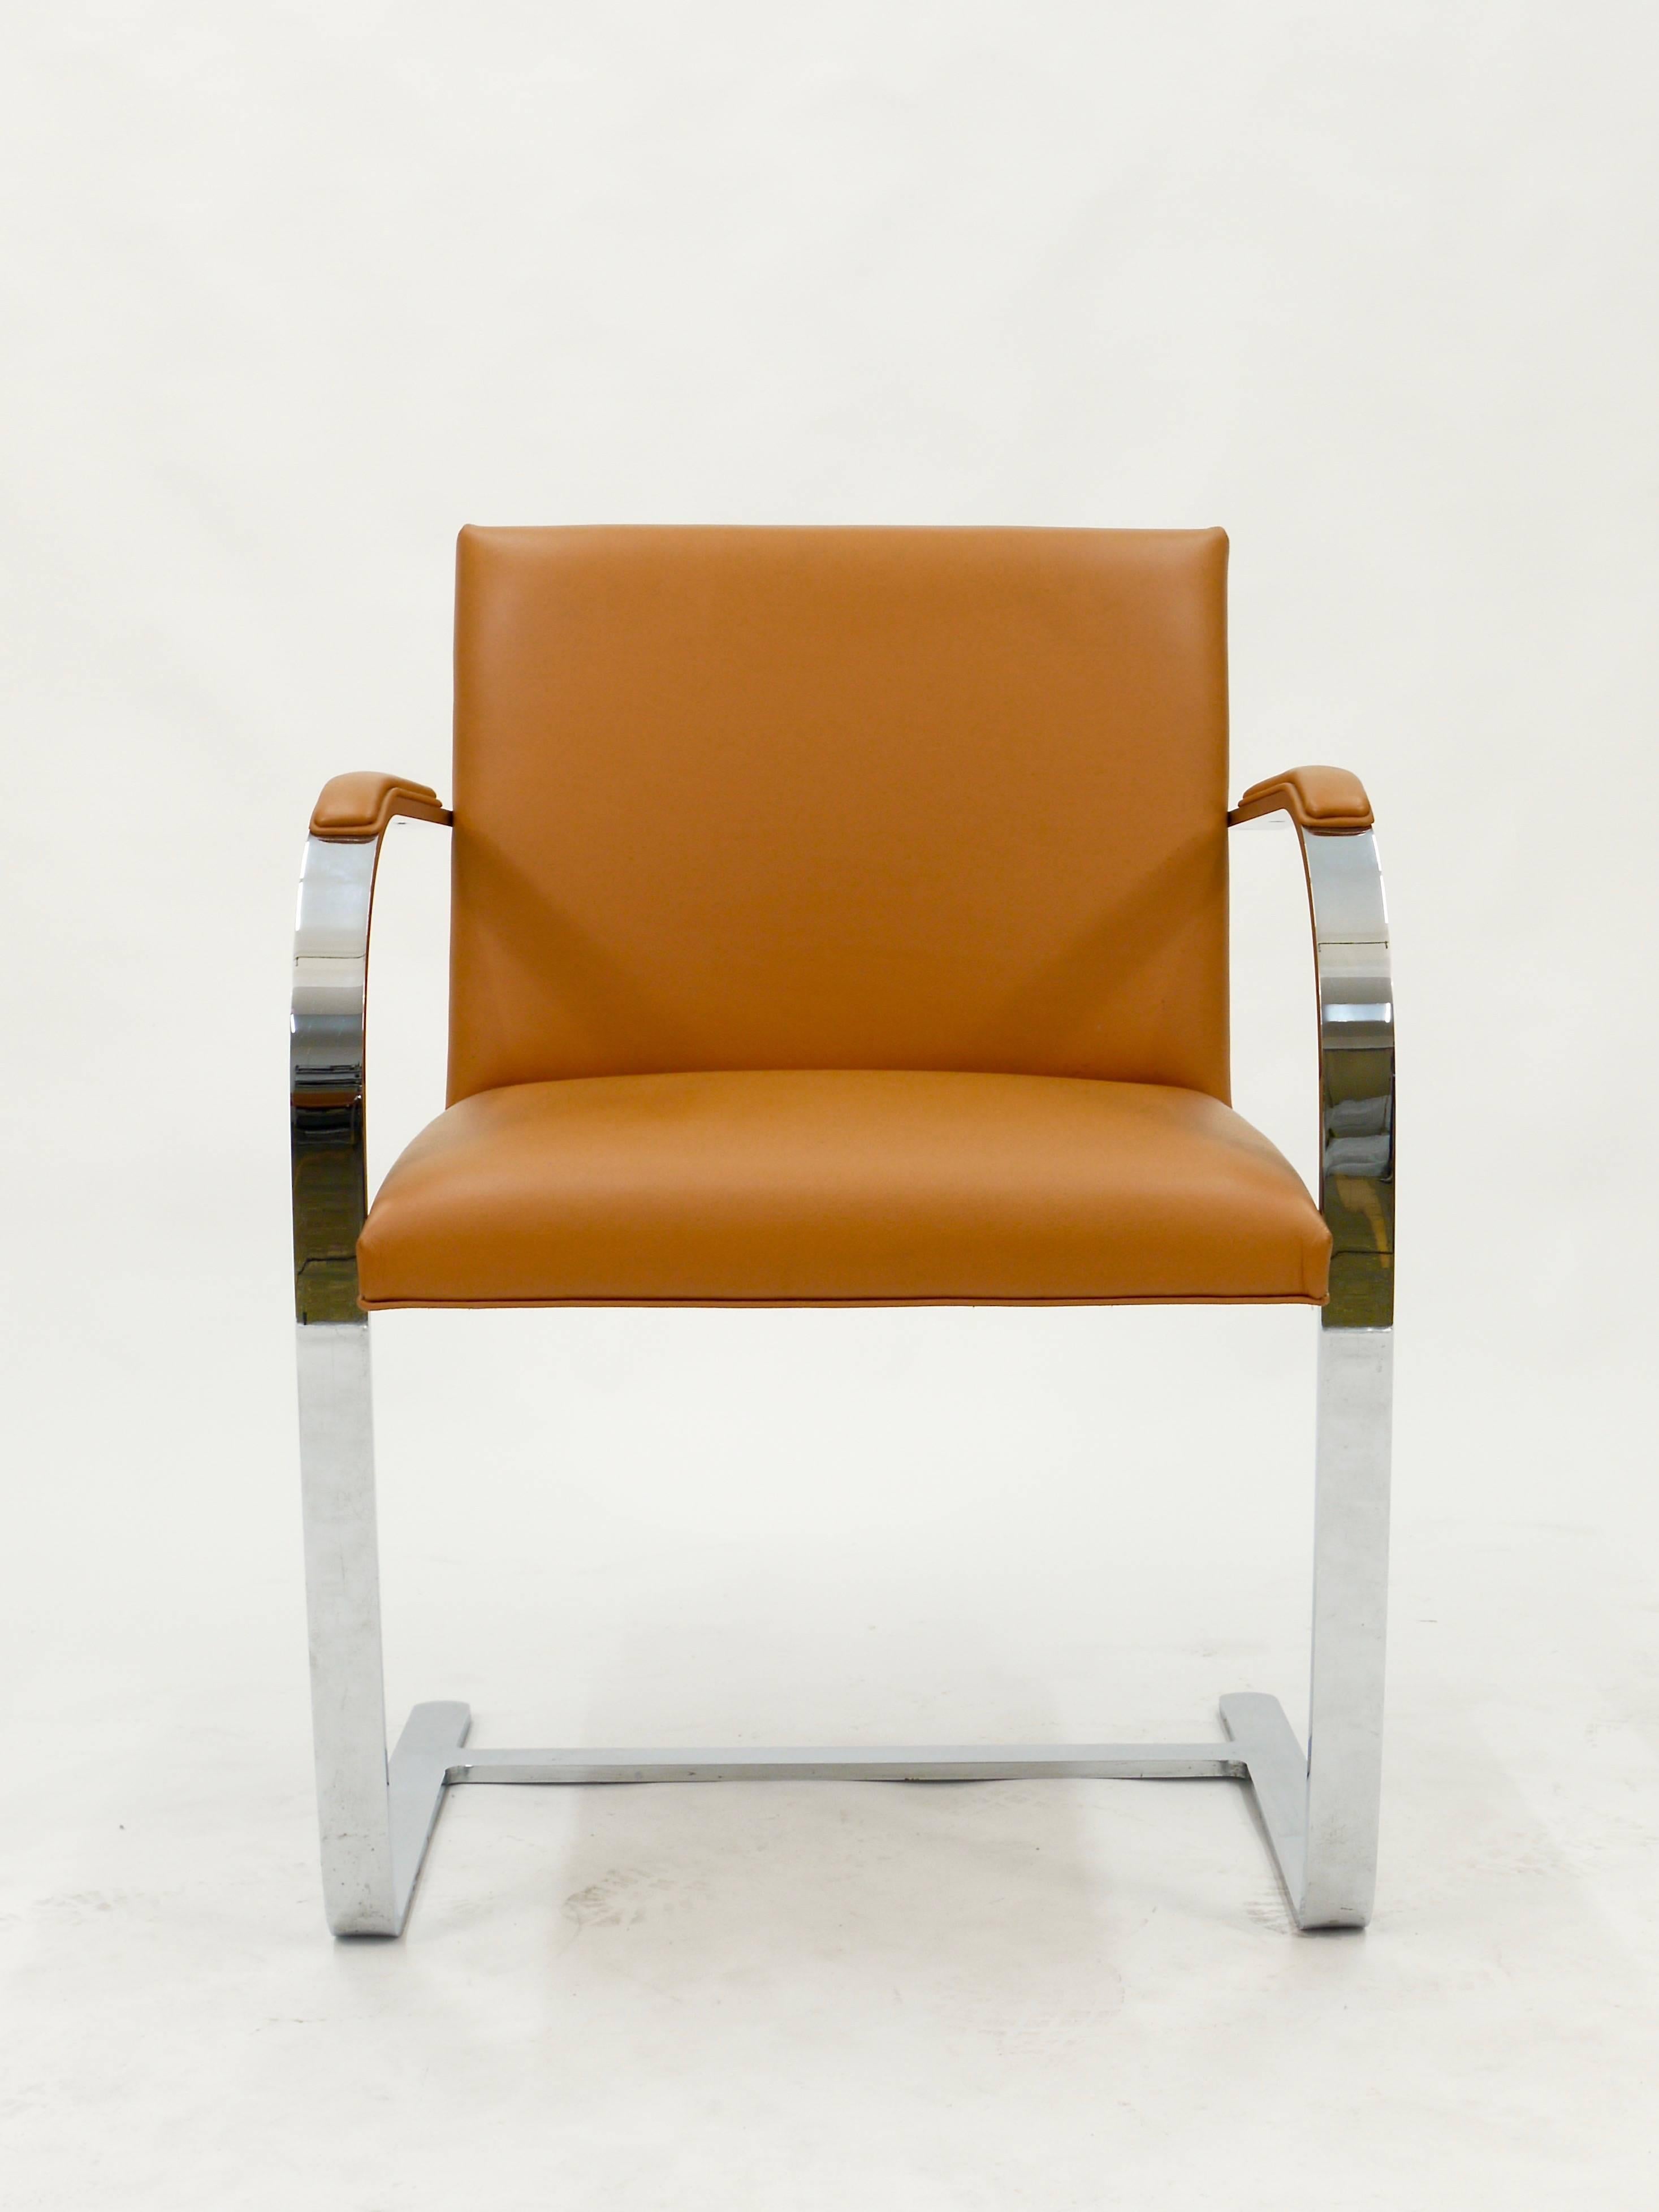 A set of six cantilever chromed flat bar chairs, models 